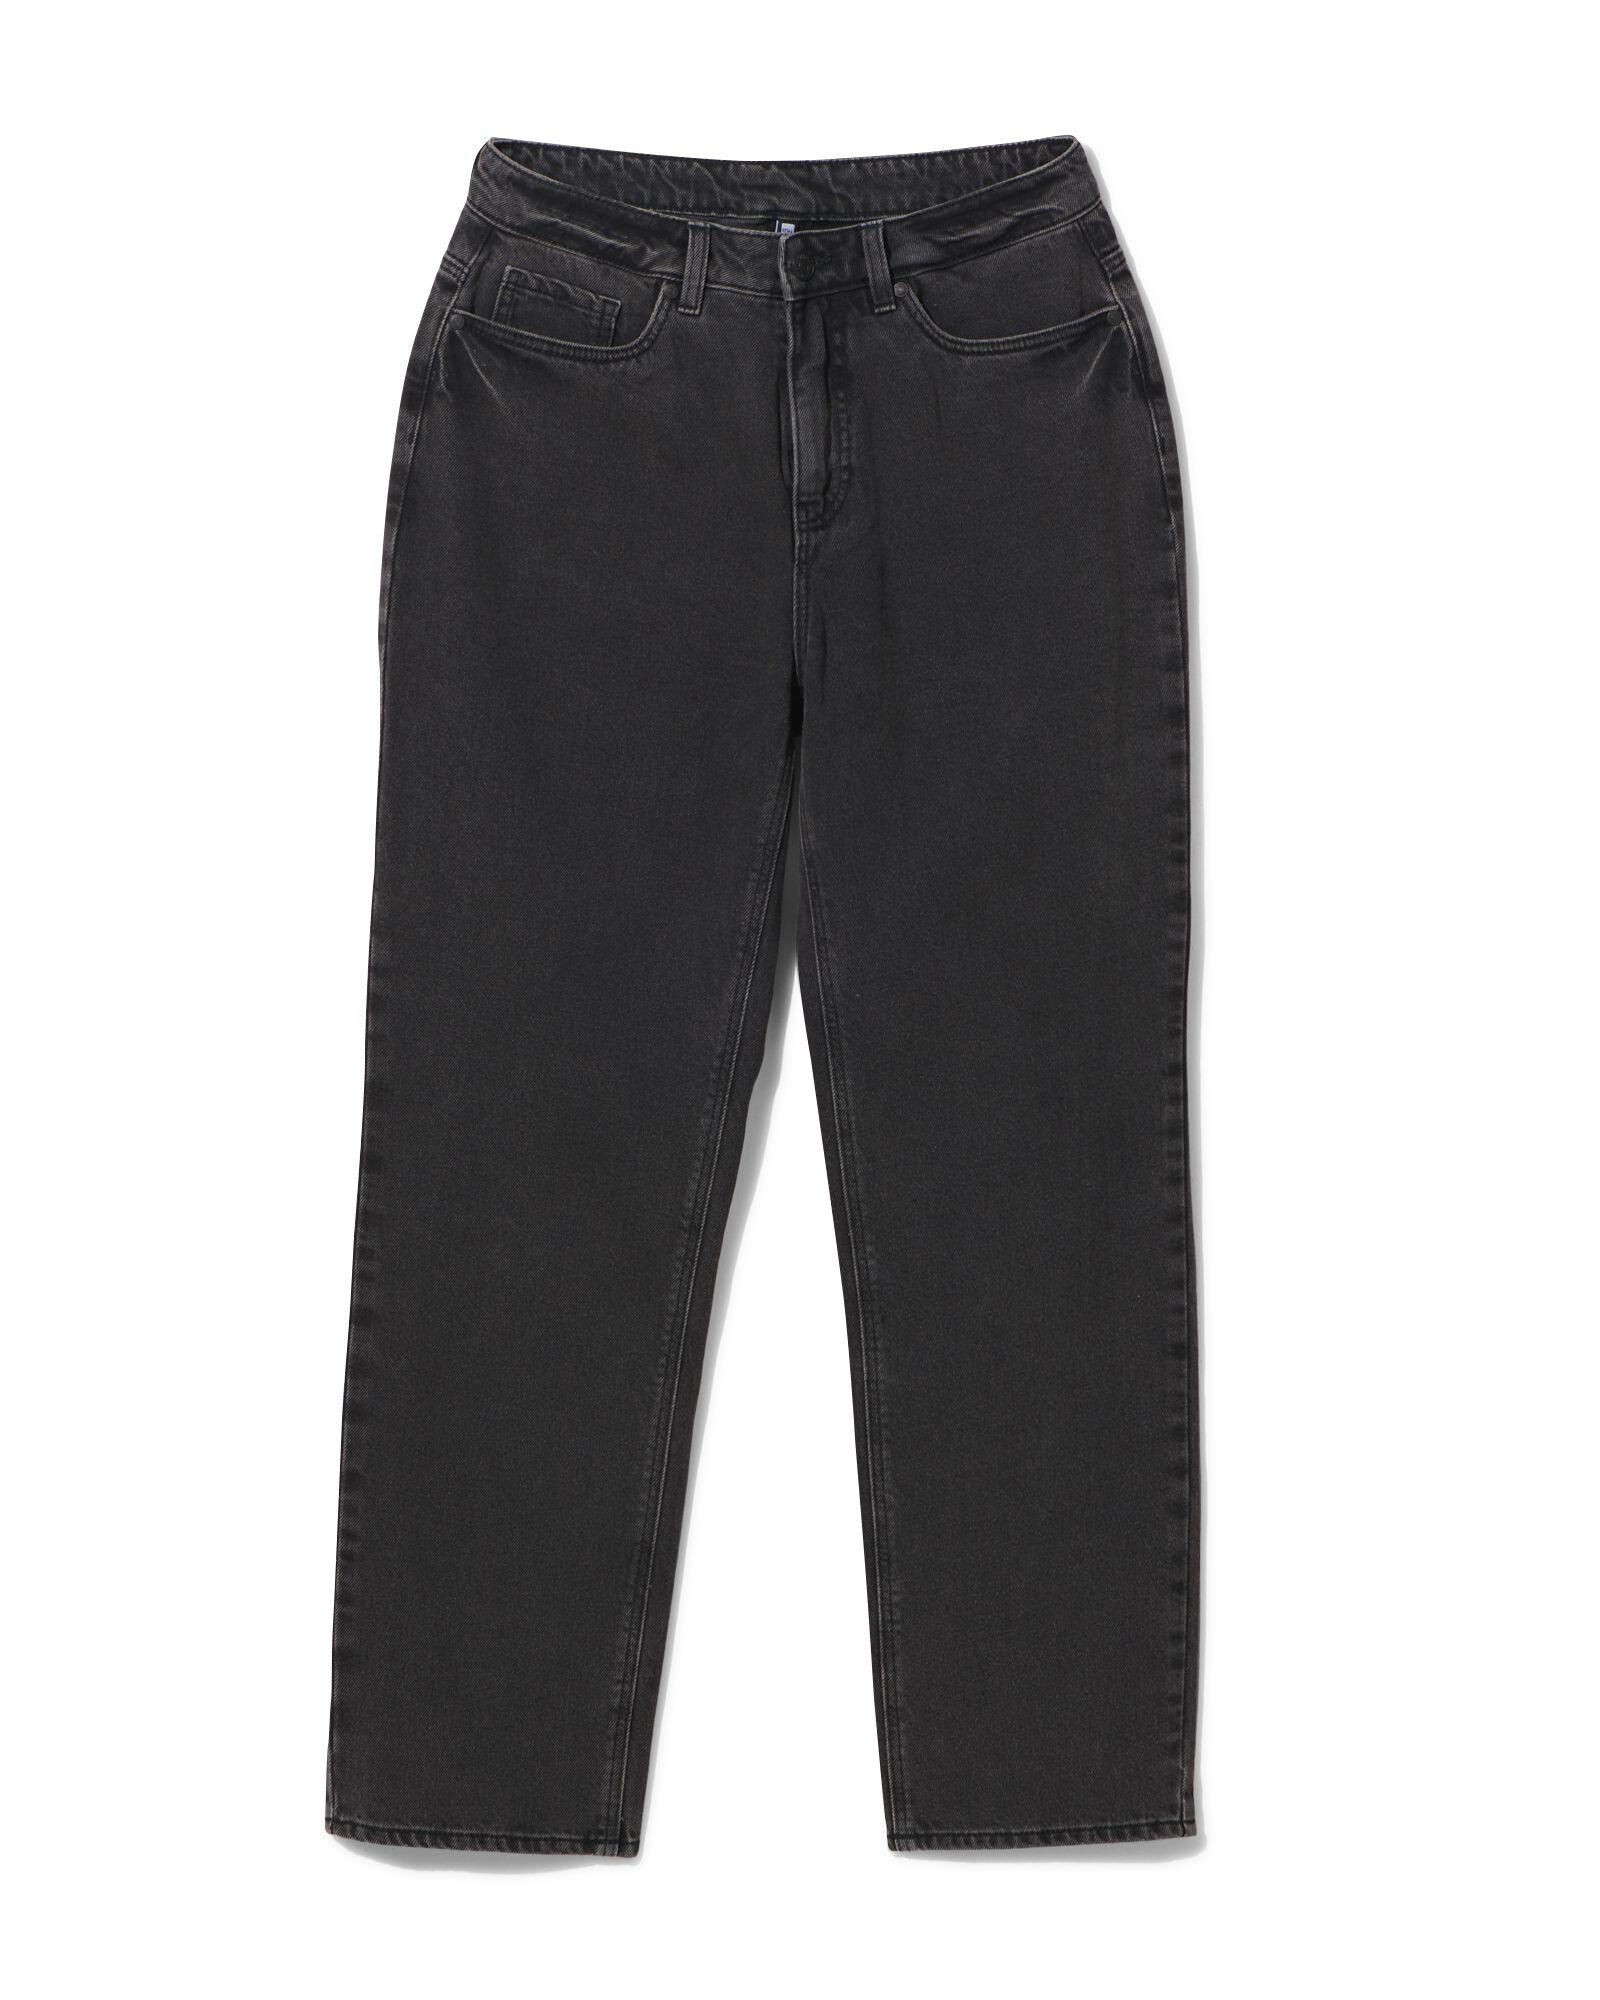 Damen-Jeans, Straight Fit dunkelgrau 36 - 36319981 - HEMA